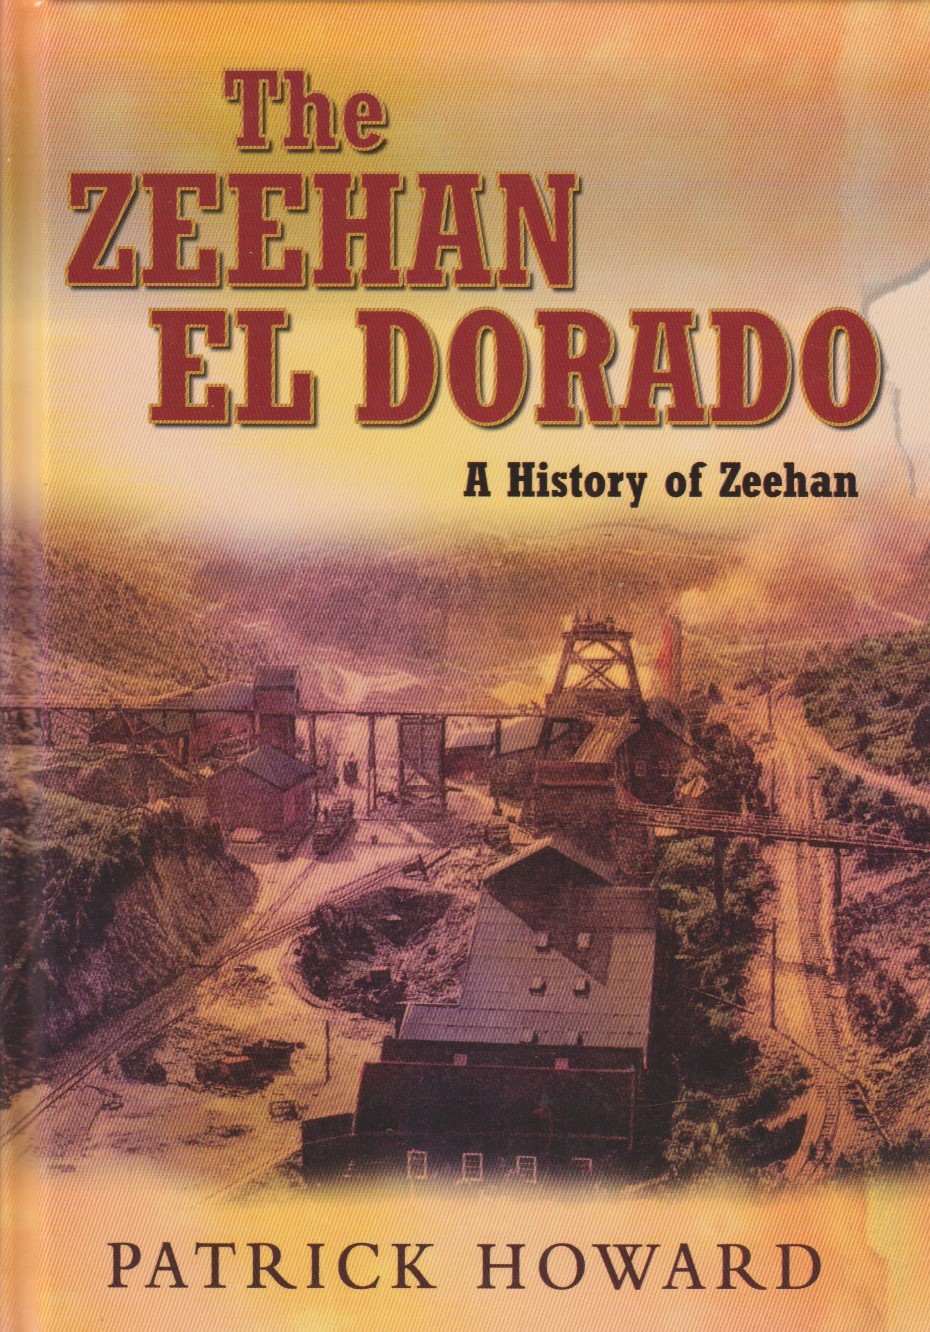 The Zeehan El Dorado - A History of Zeehan hardcover